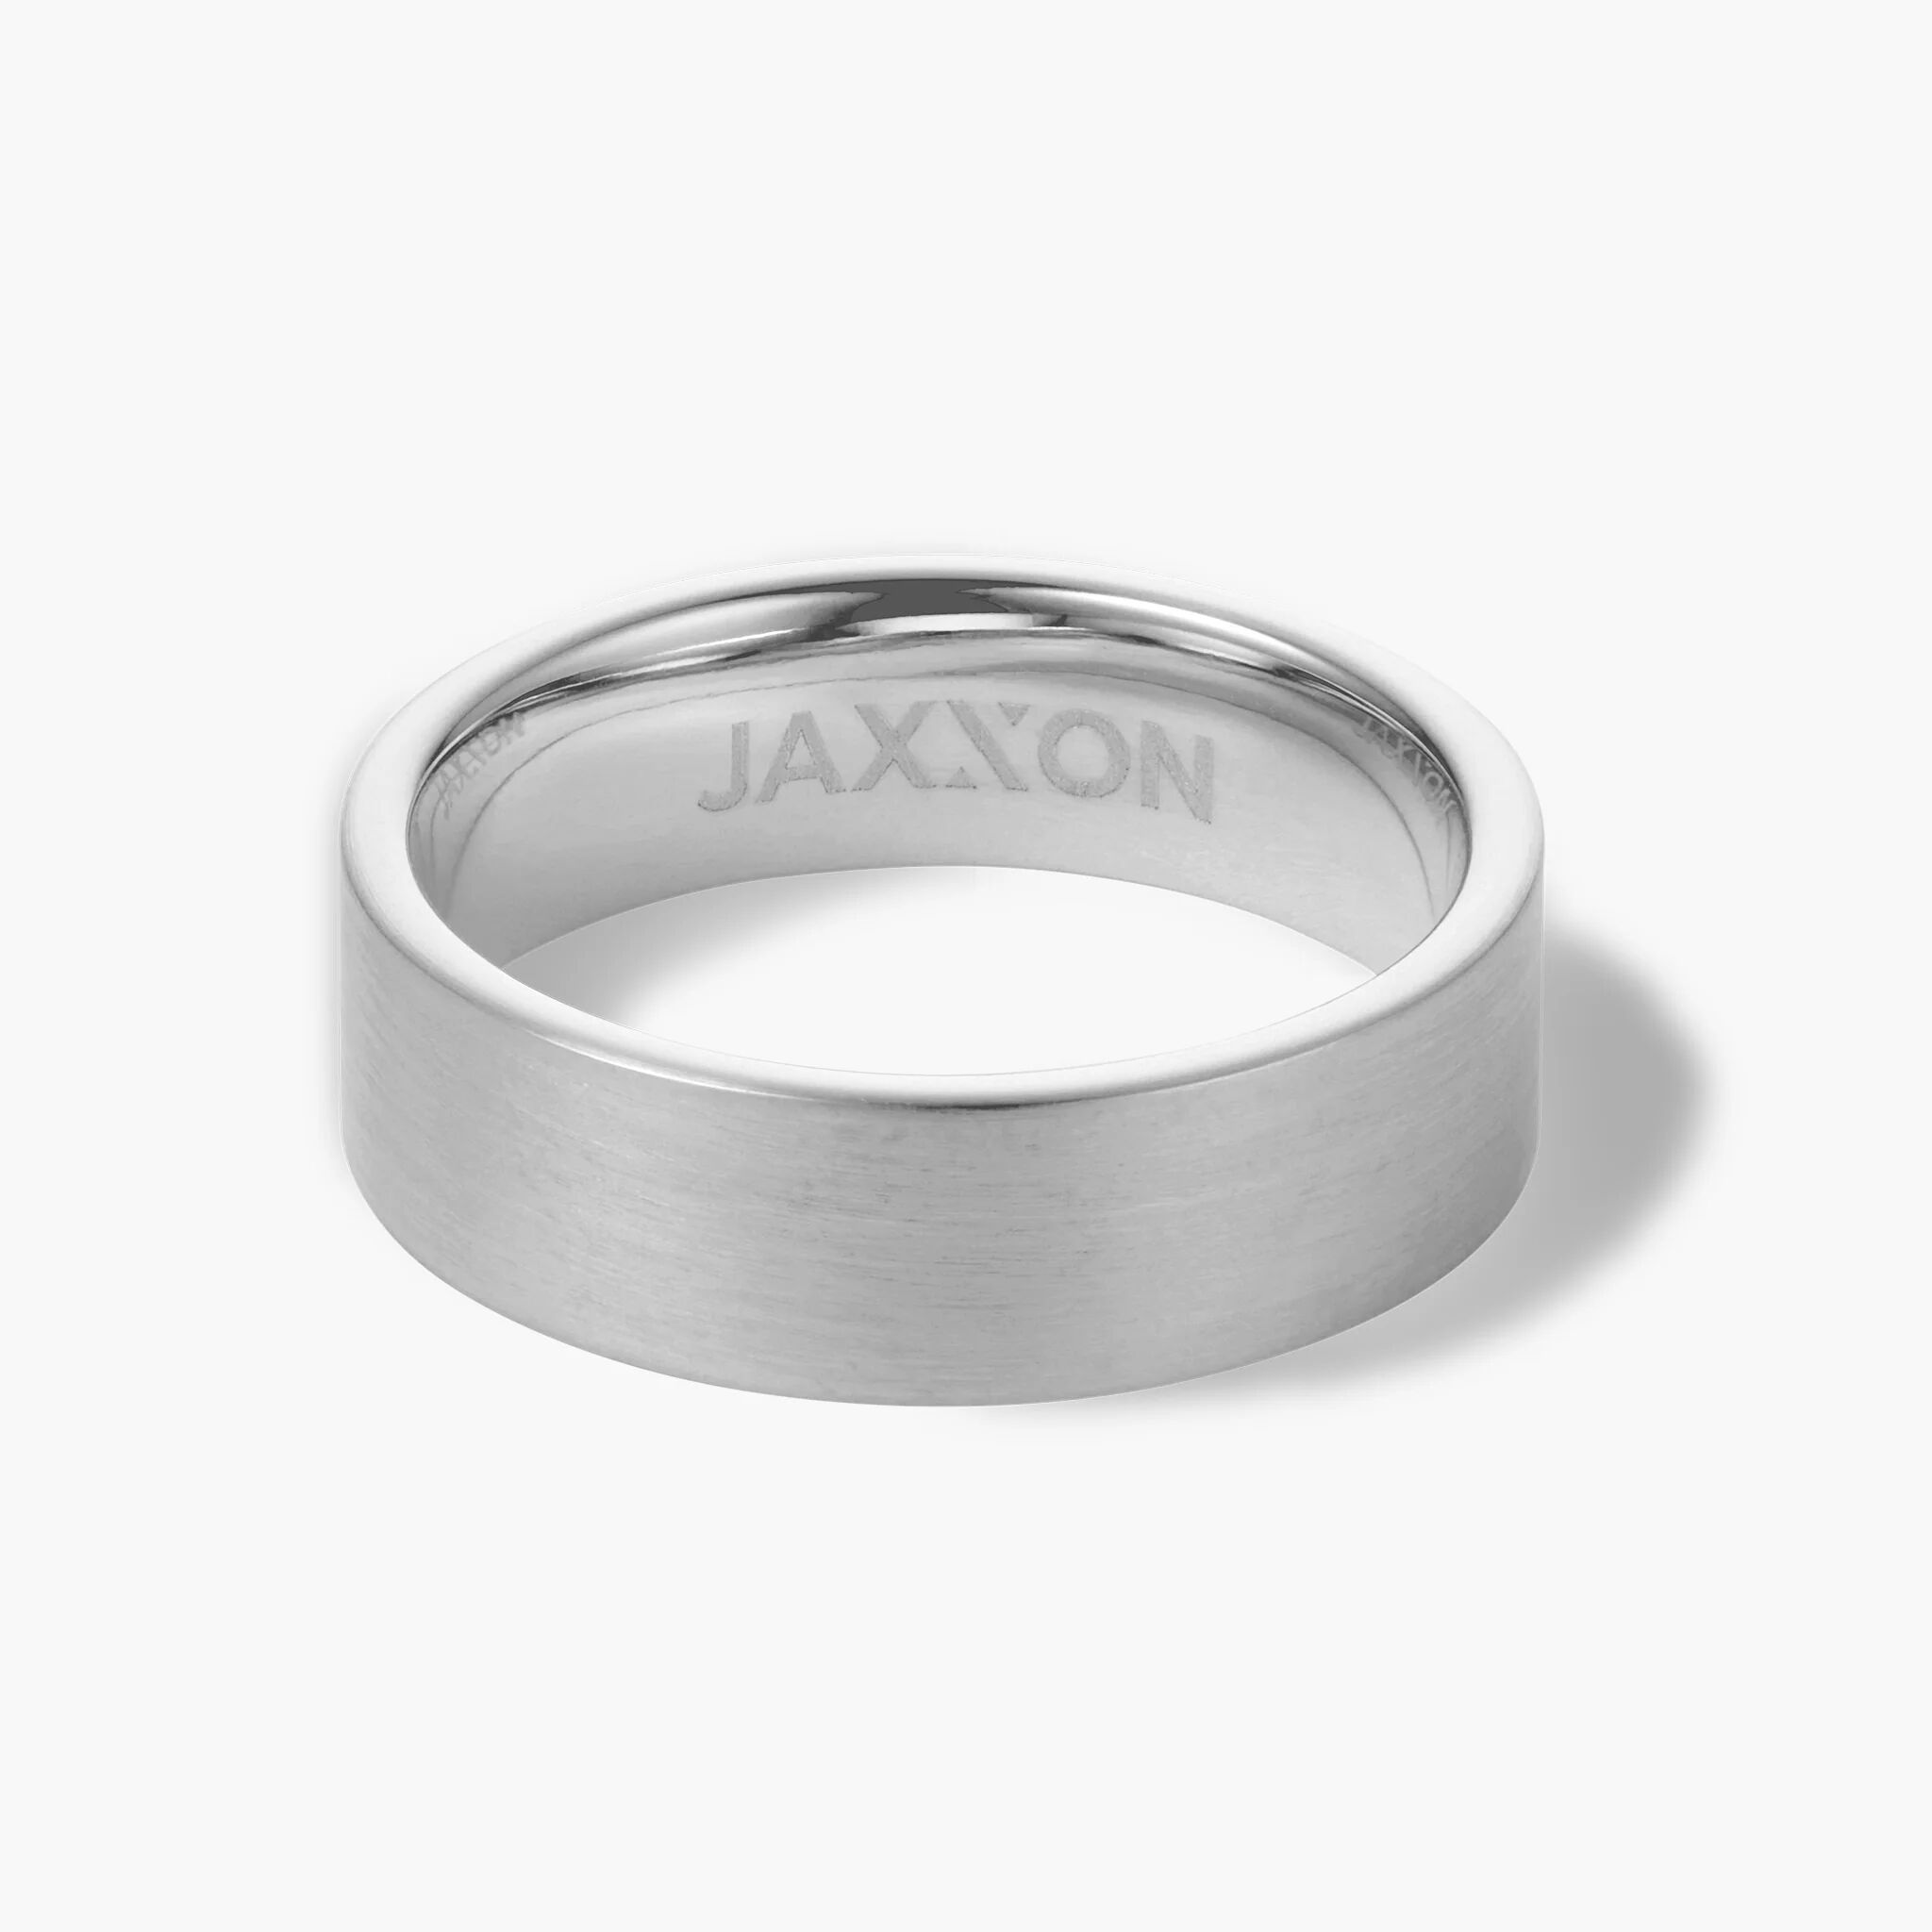 JAXXON 7mm Classic Tungsten Silver Ring   Size 9